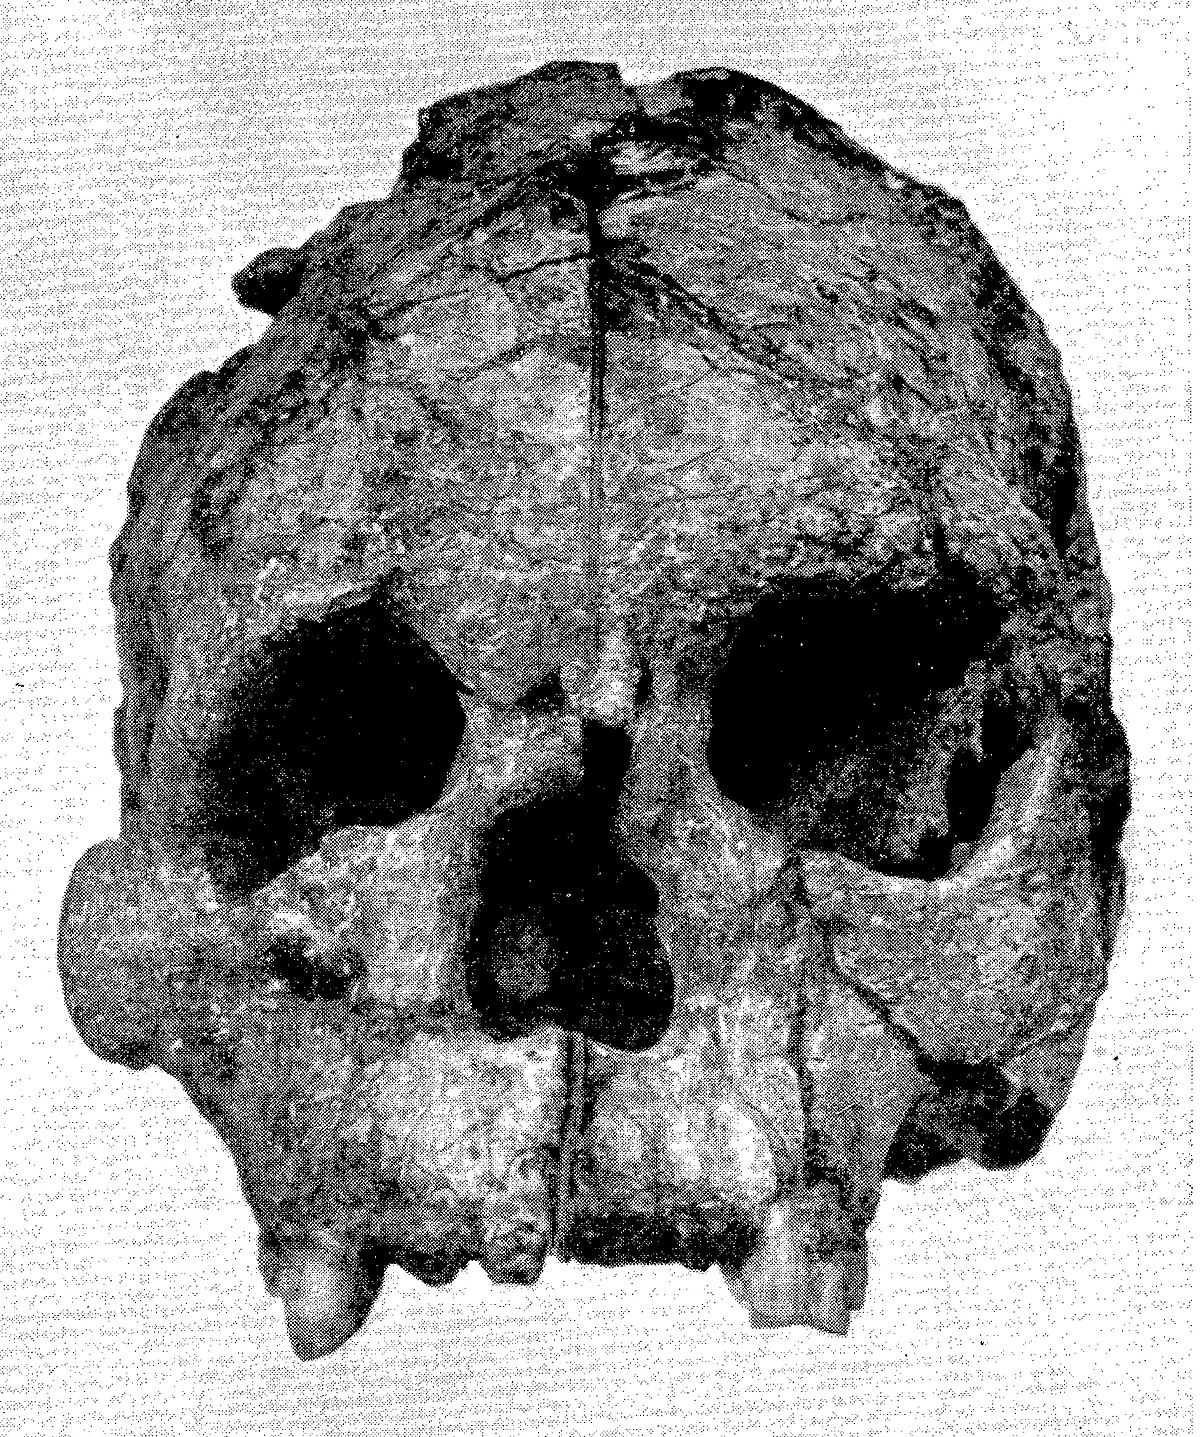 Talgai Skull - Wikipedia